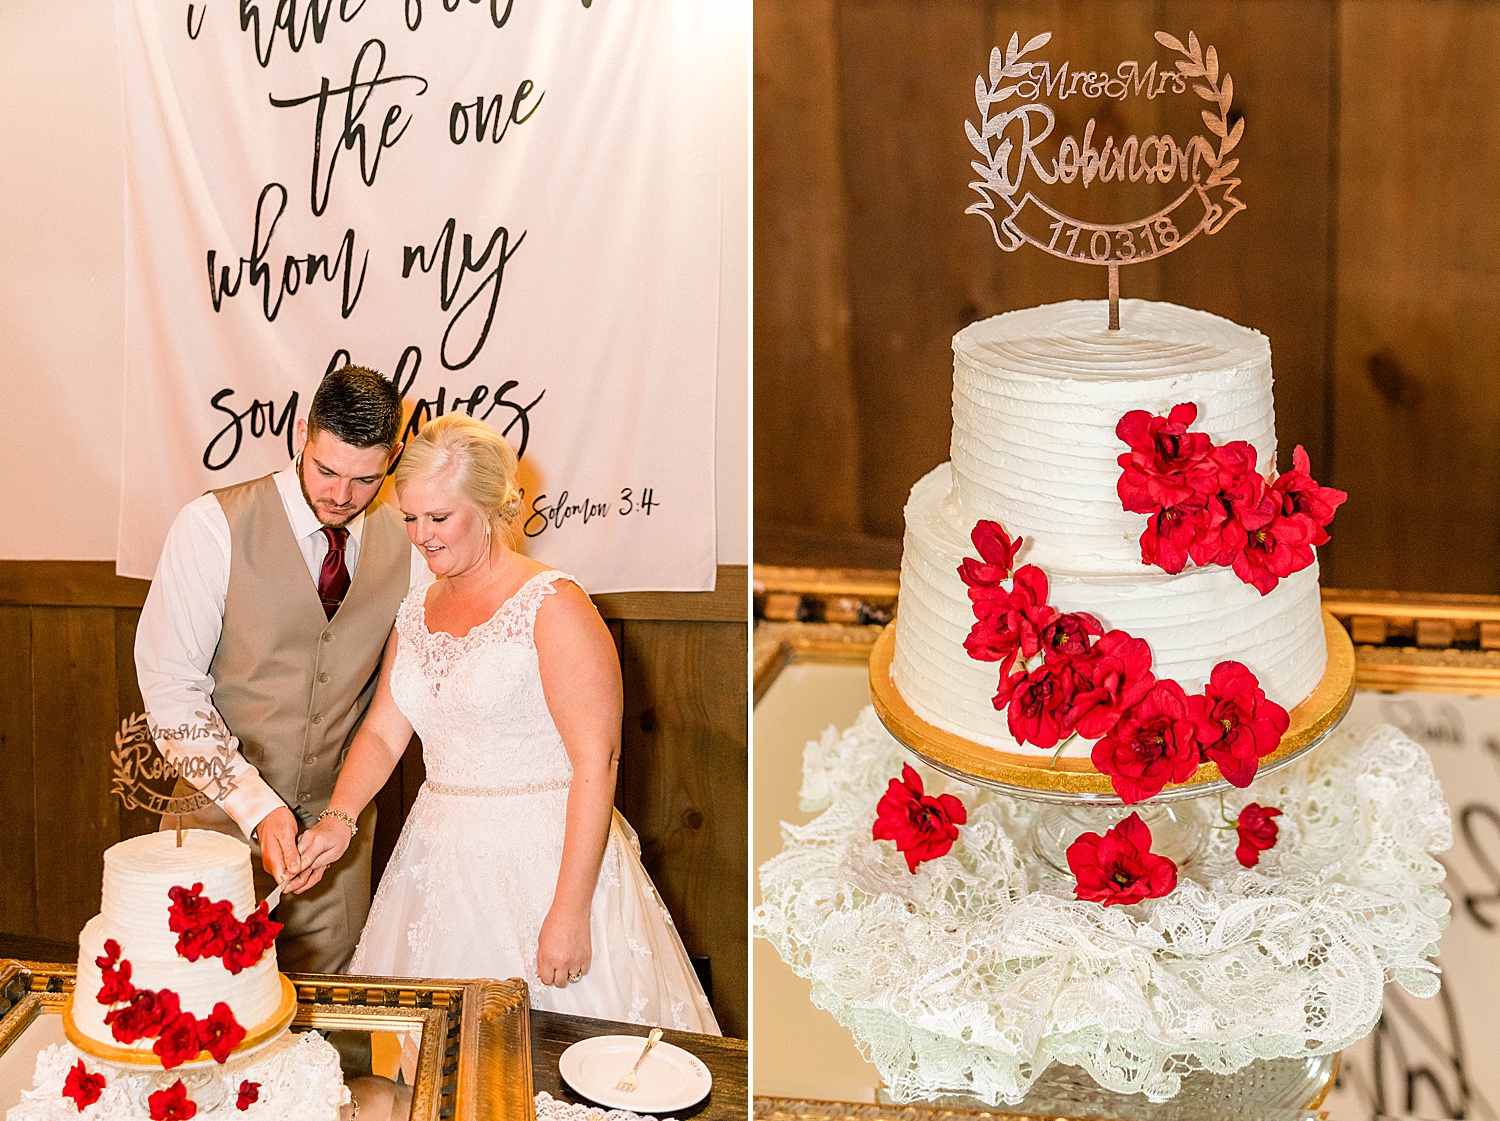 couple cuts their wedding cake